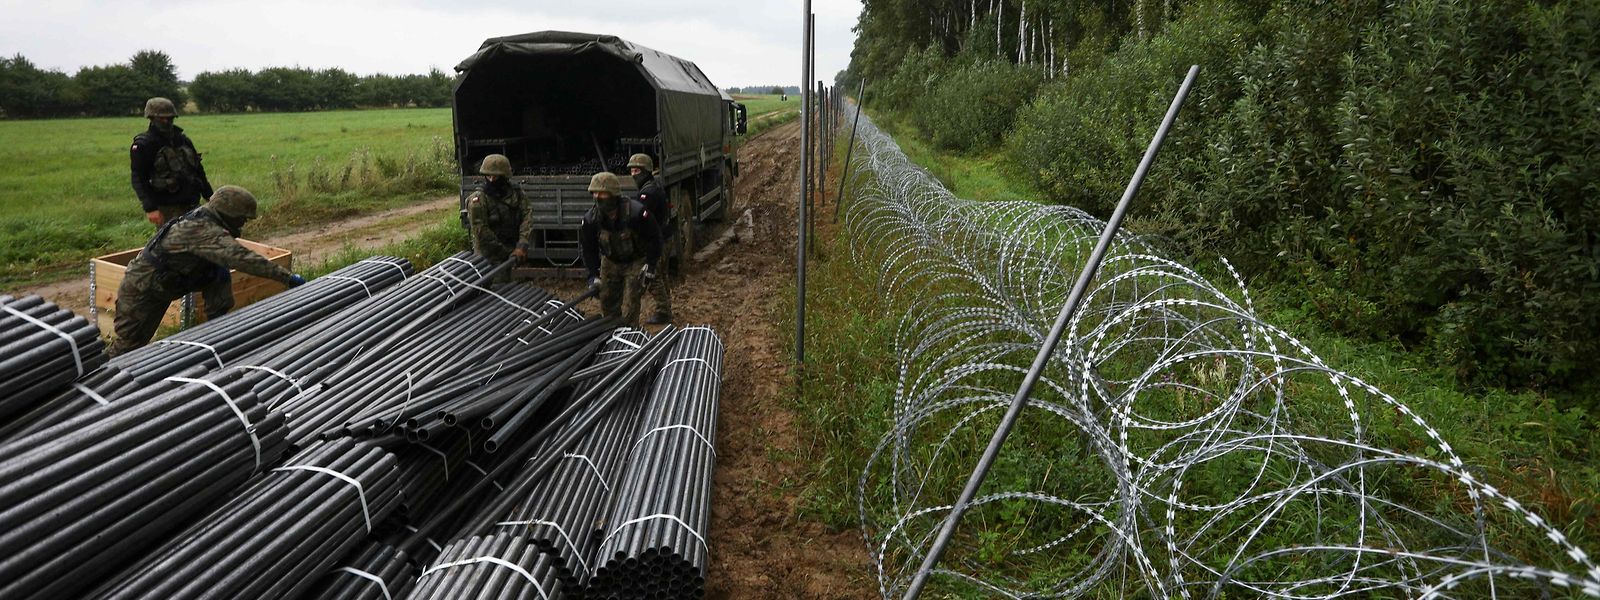 Polnische Soldaten errichteten vergangene Woche Stacheldrahtsperren entlang der belarussischen Grenze.